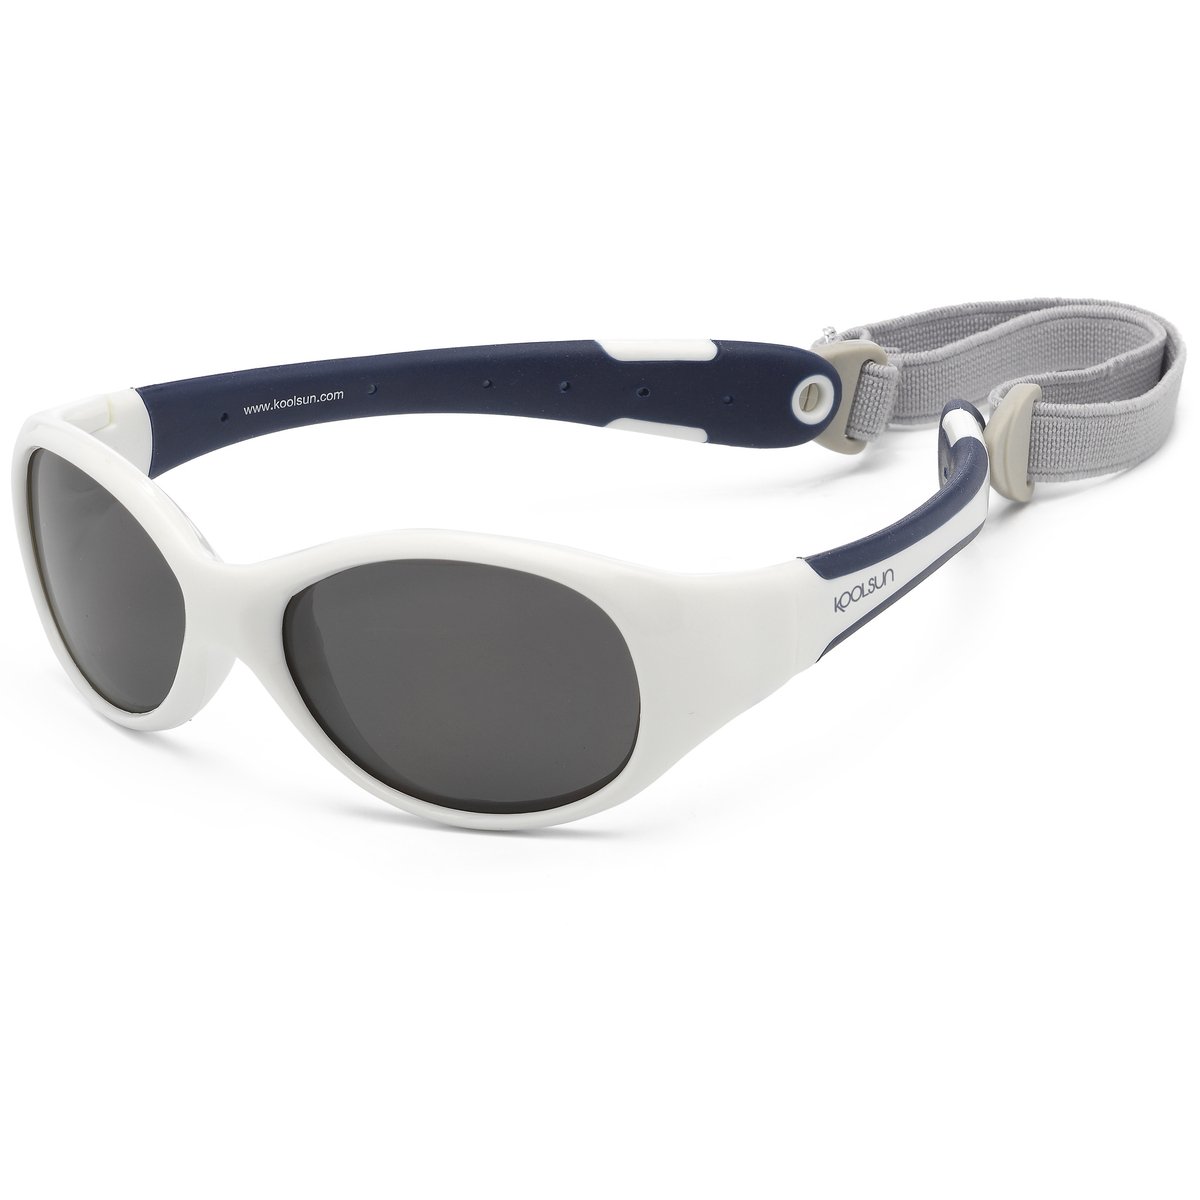 KOOLSUN - Flex - baby zonnebril - Wit Navy - 0-3 jaar - UV400 Categorie 3